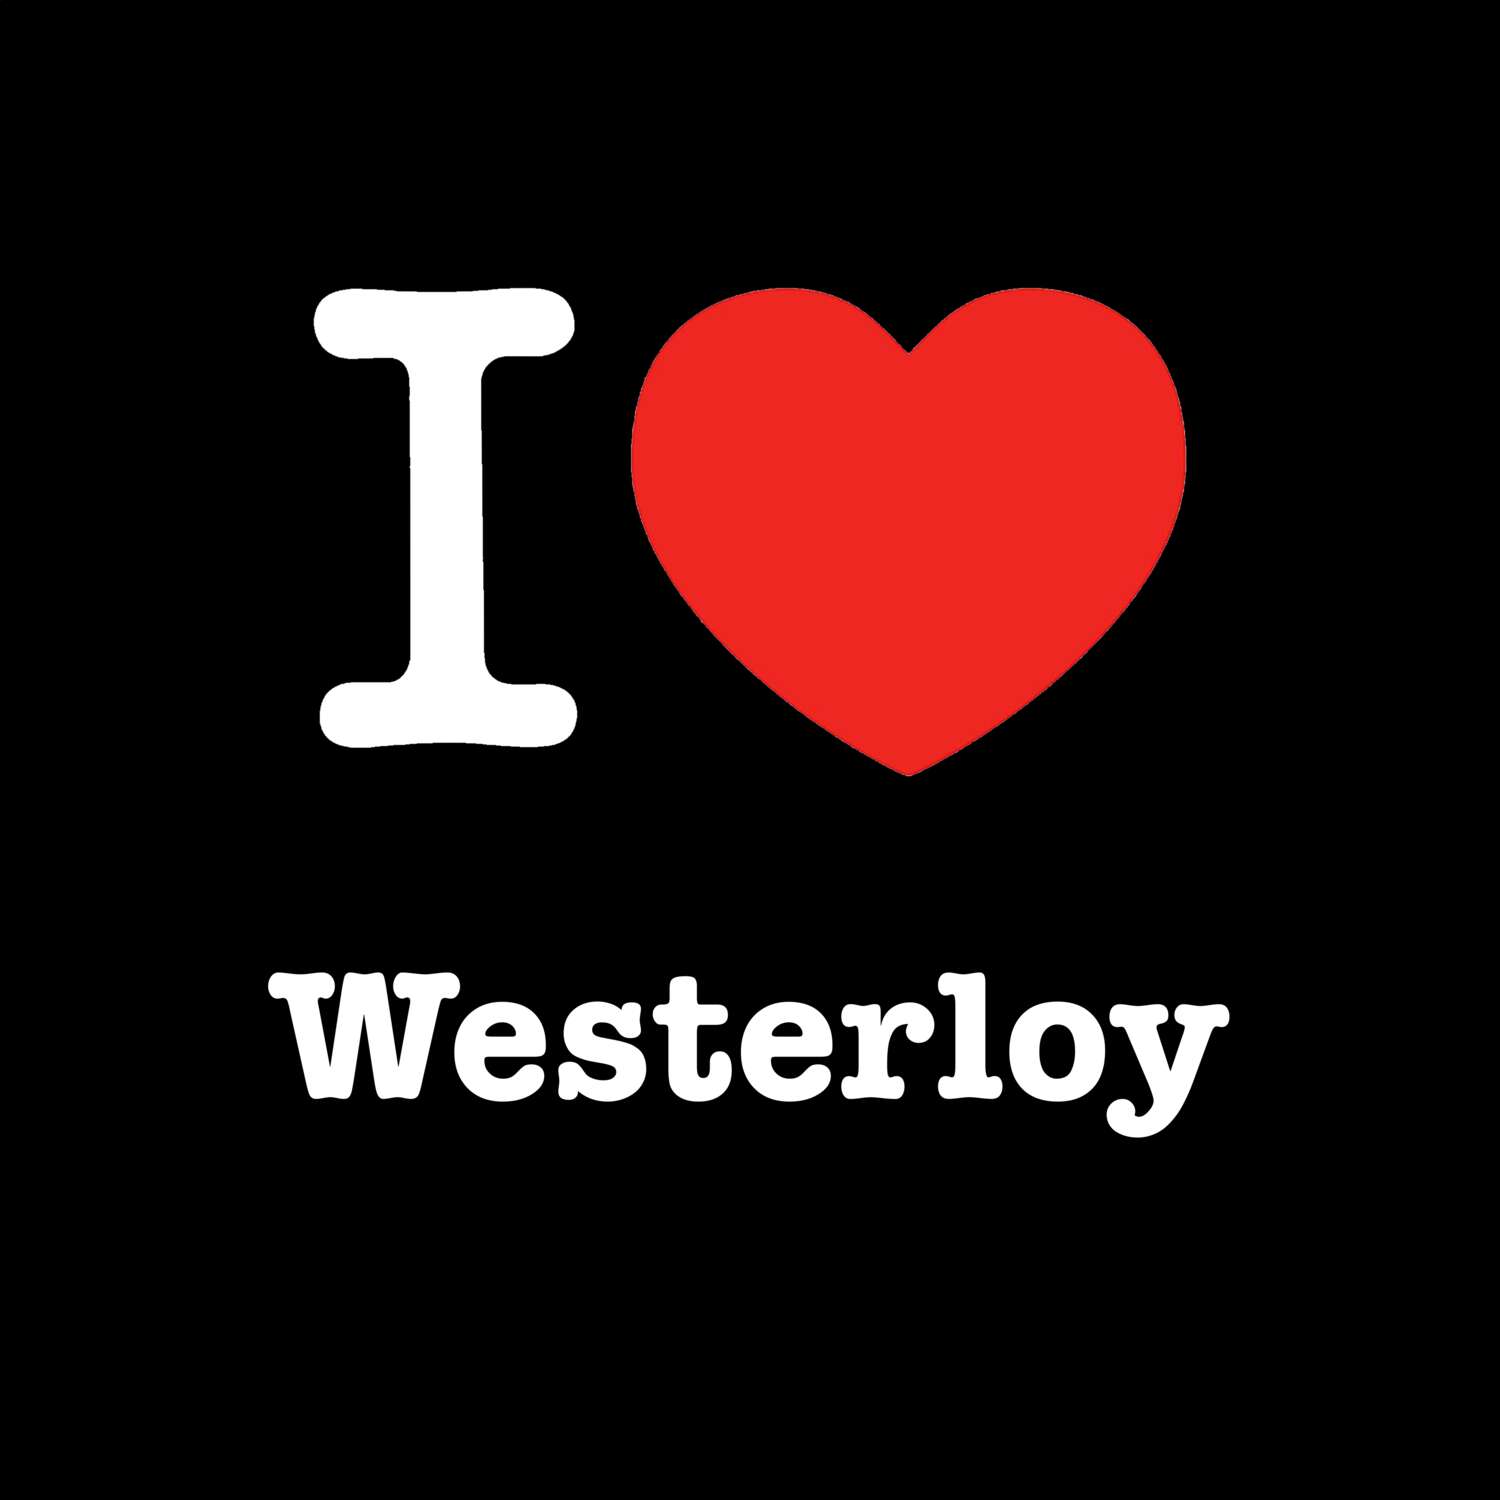 Westerloy T-Shirt »I love«